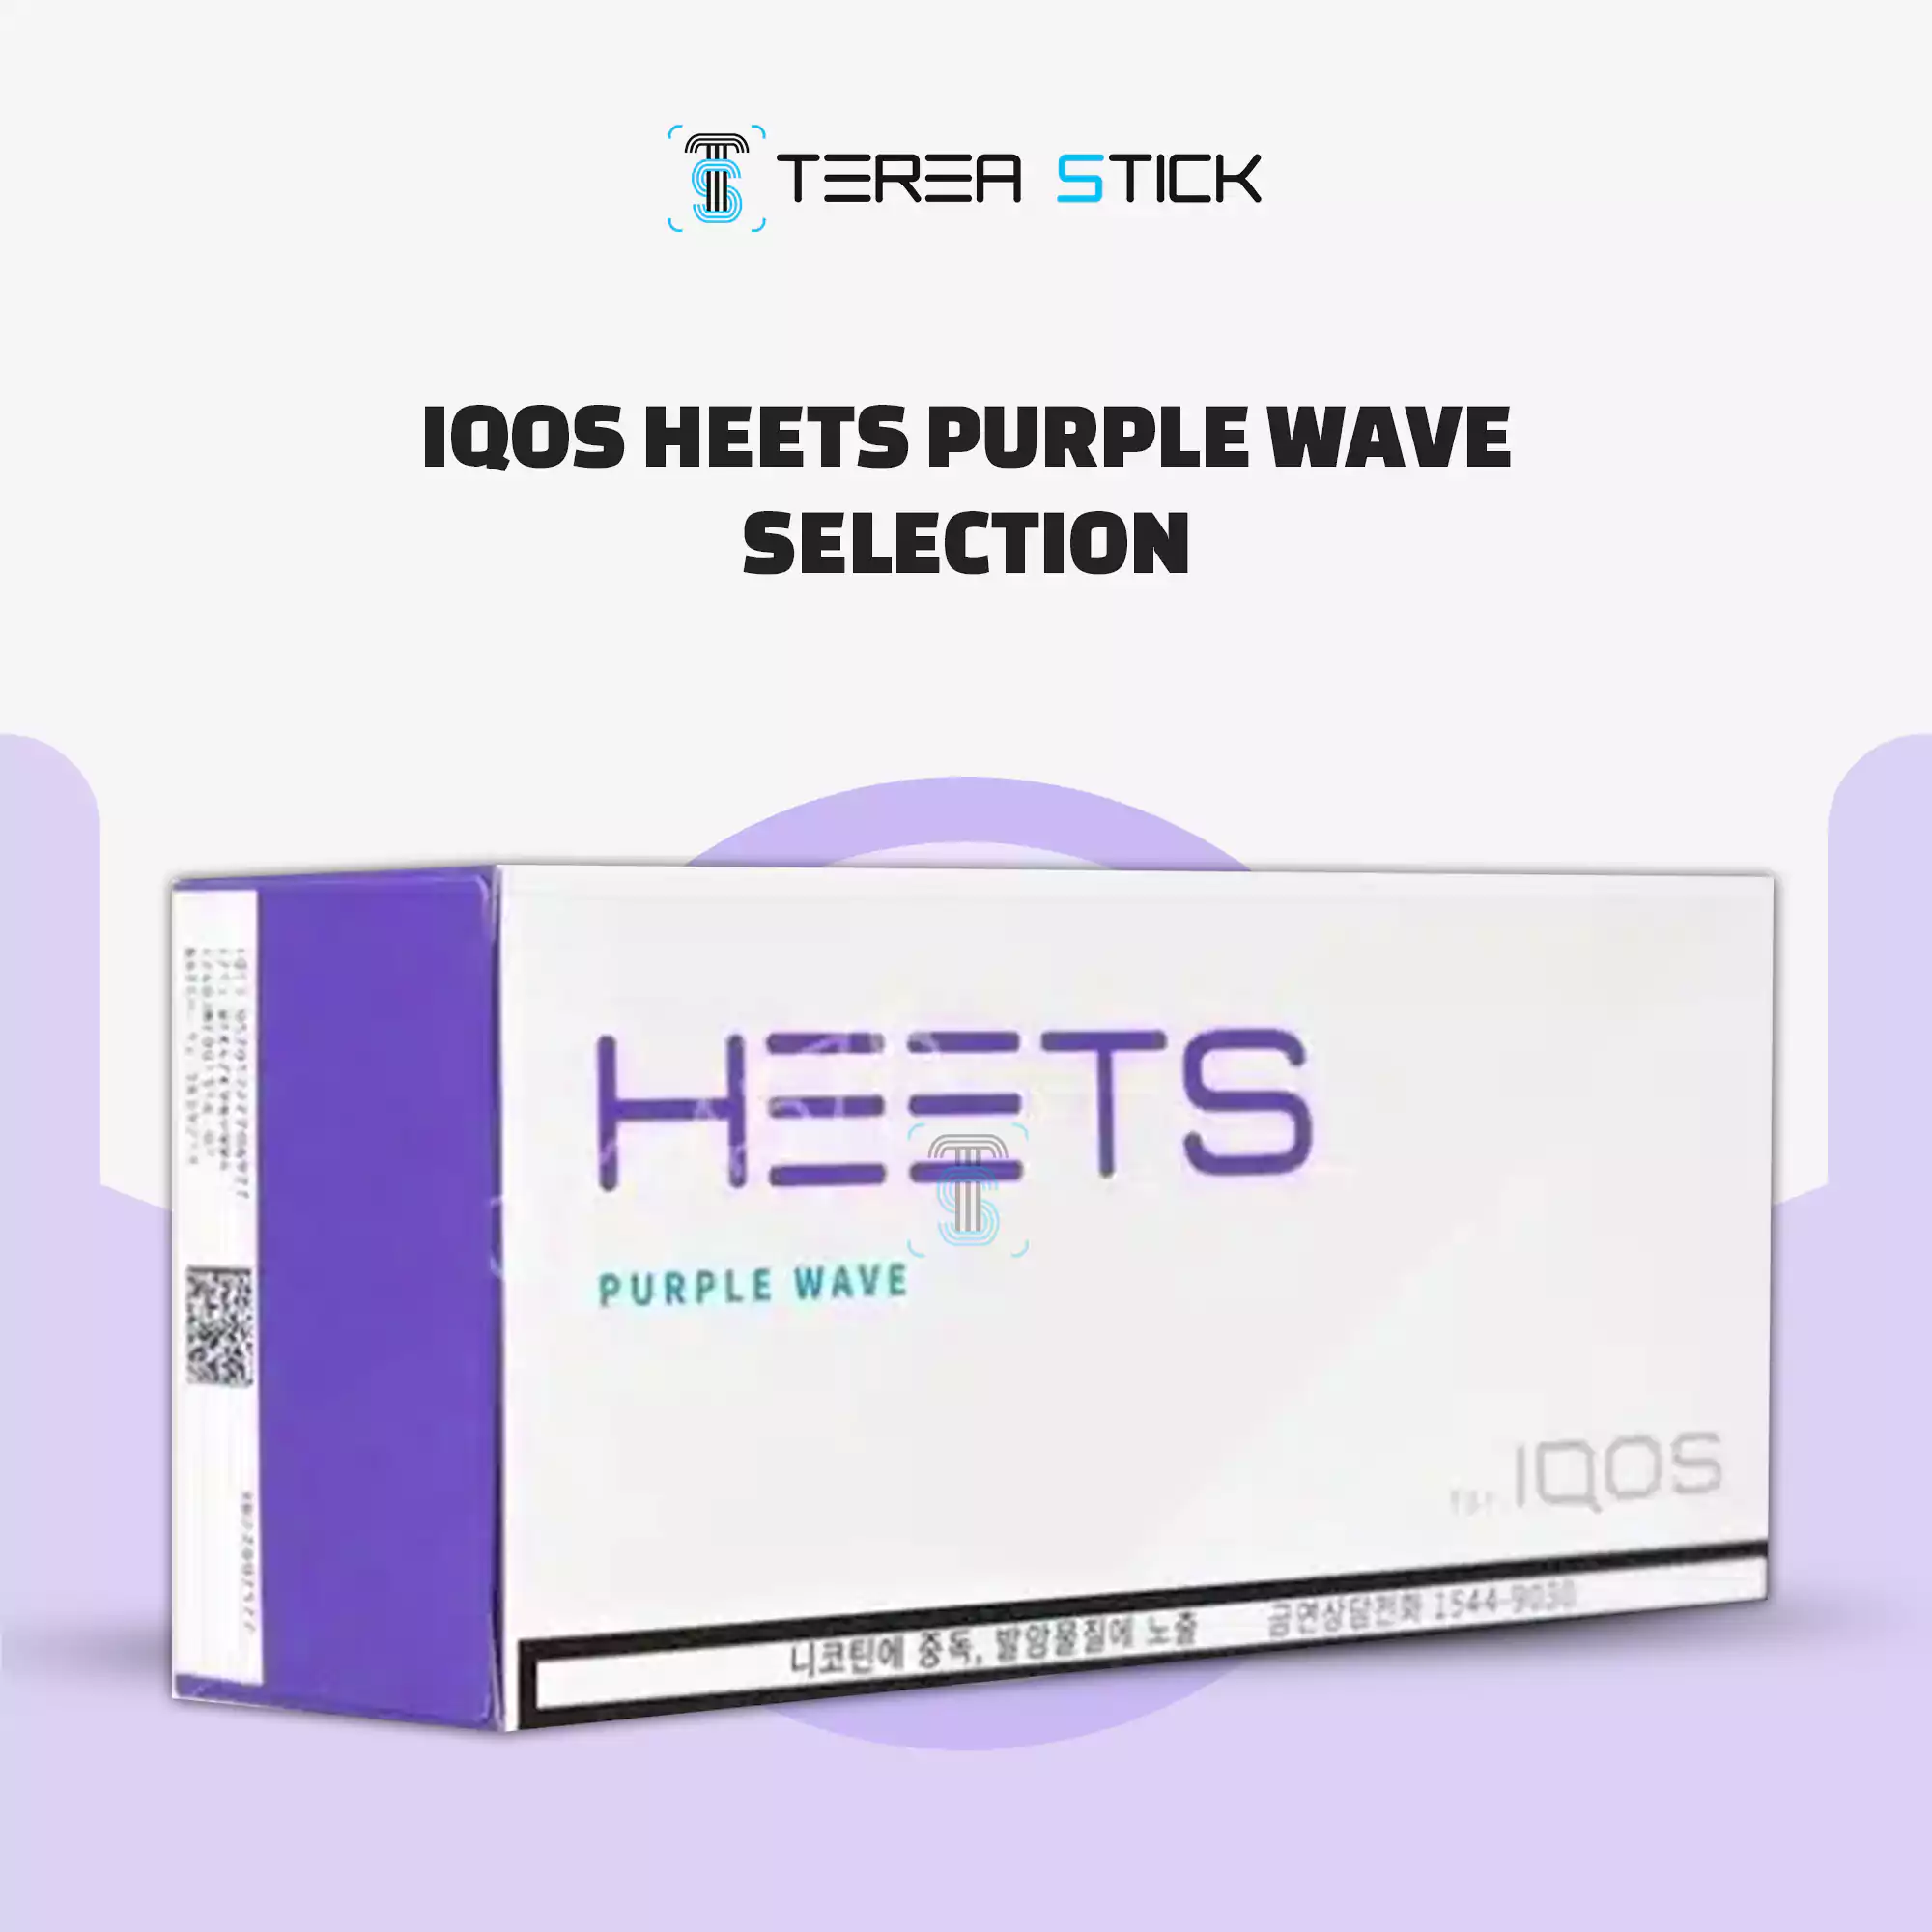 Heets - Purple Wave